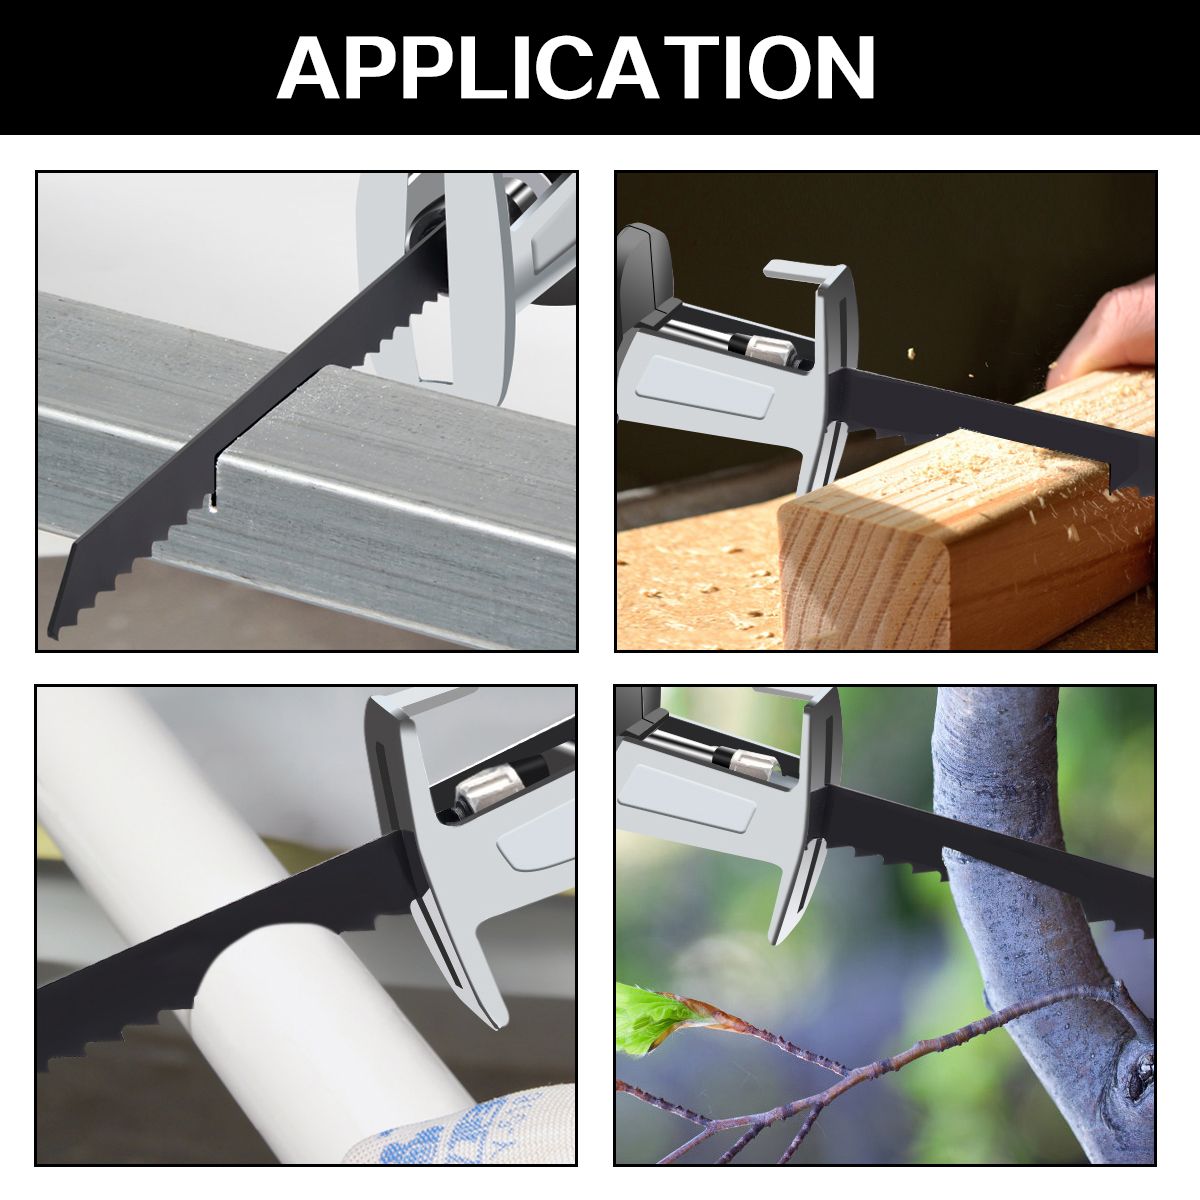 21V-Cordless-Reciprocating-Saw-Chainsaw-W-4-Saw-Blades-Metal-Cutting-Woodworking-1699270